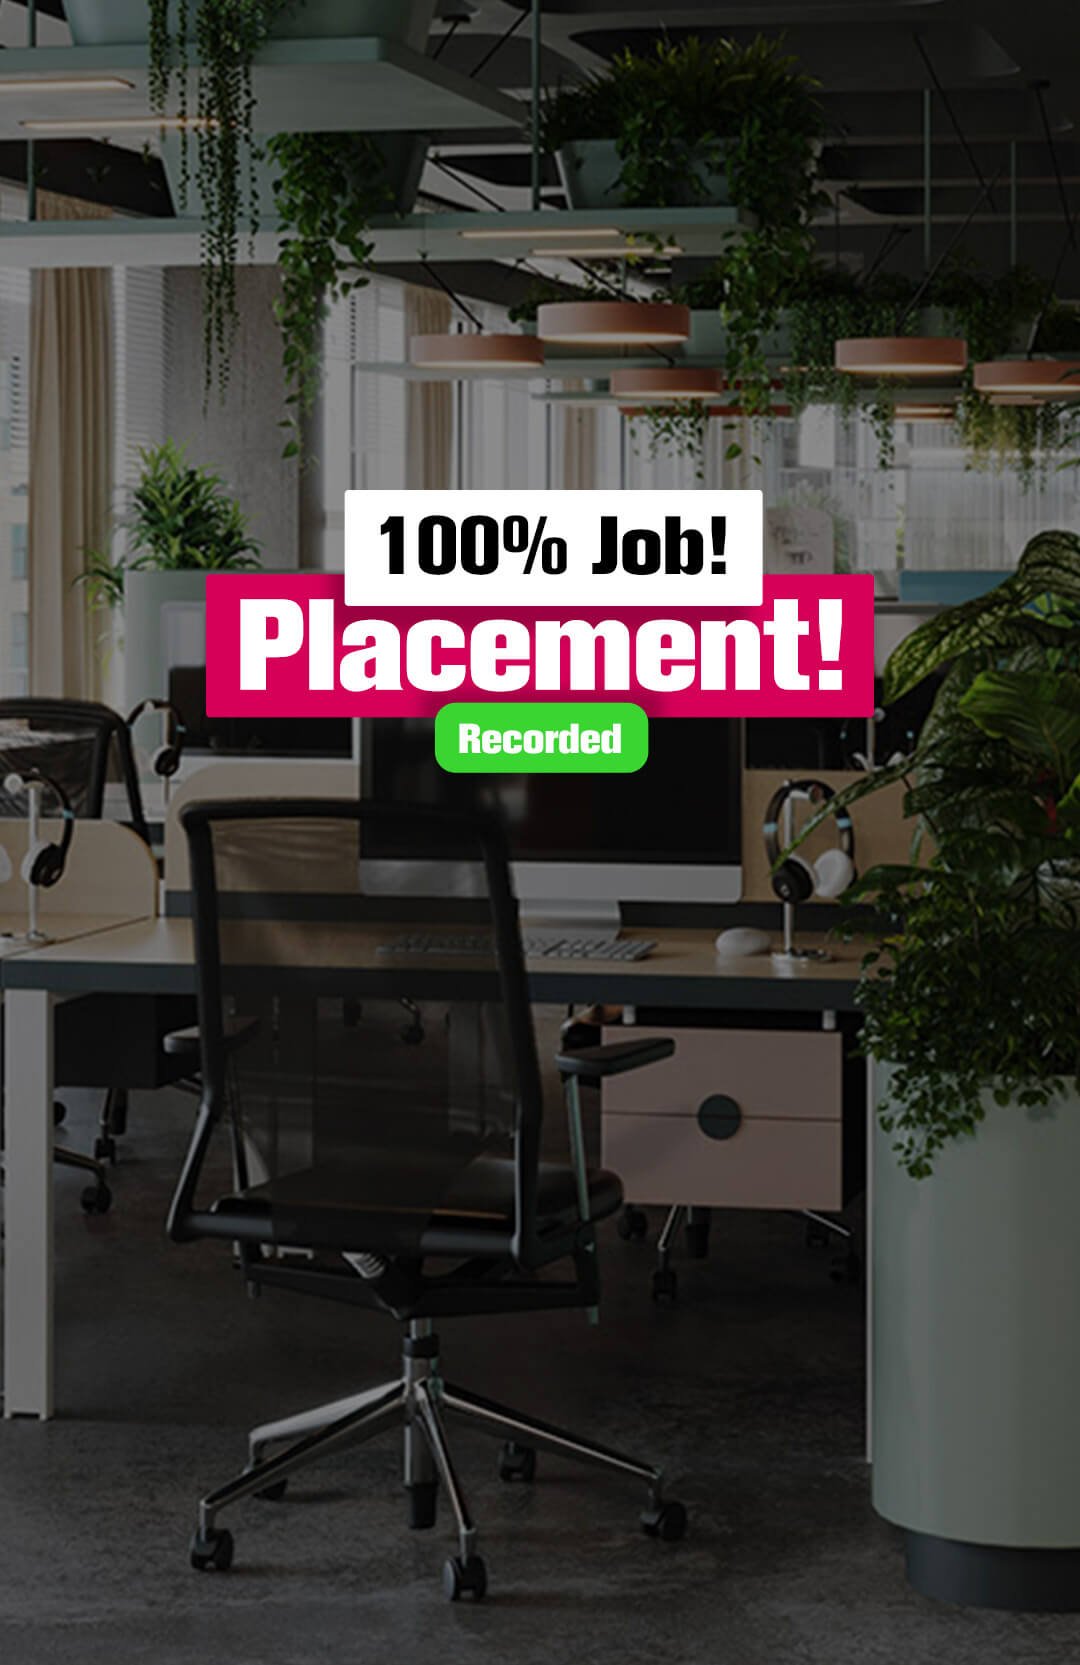 100% Job Placement